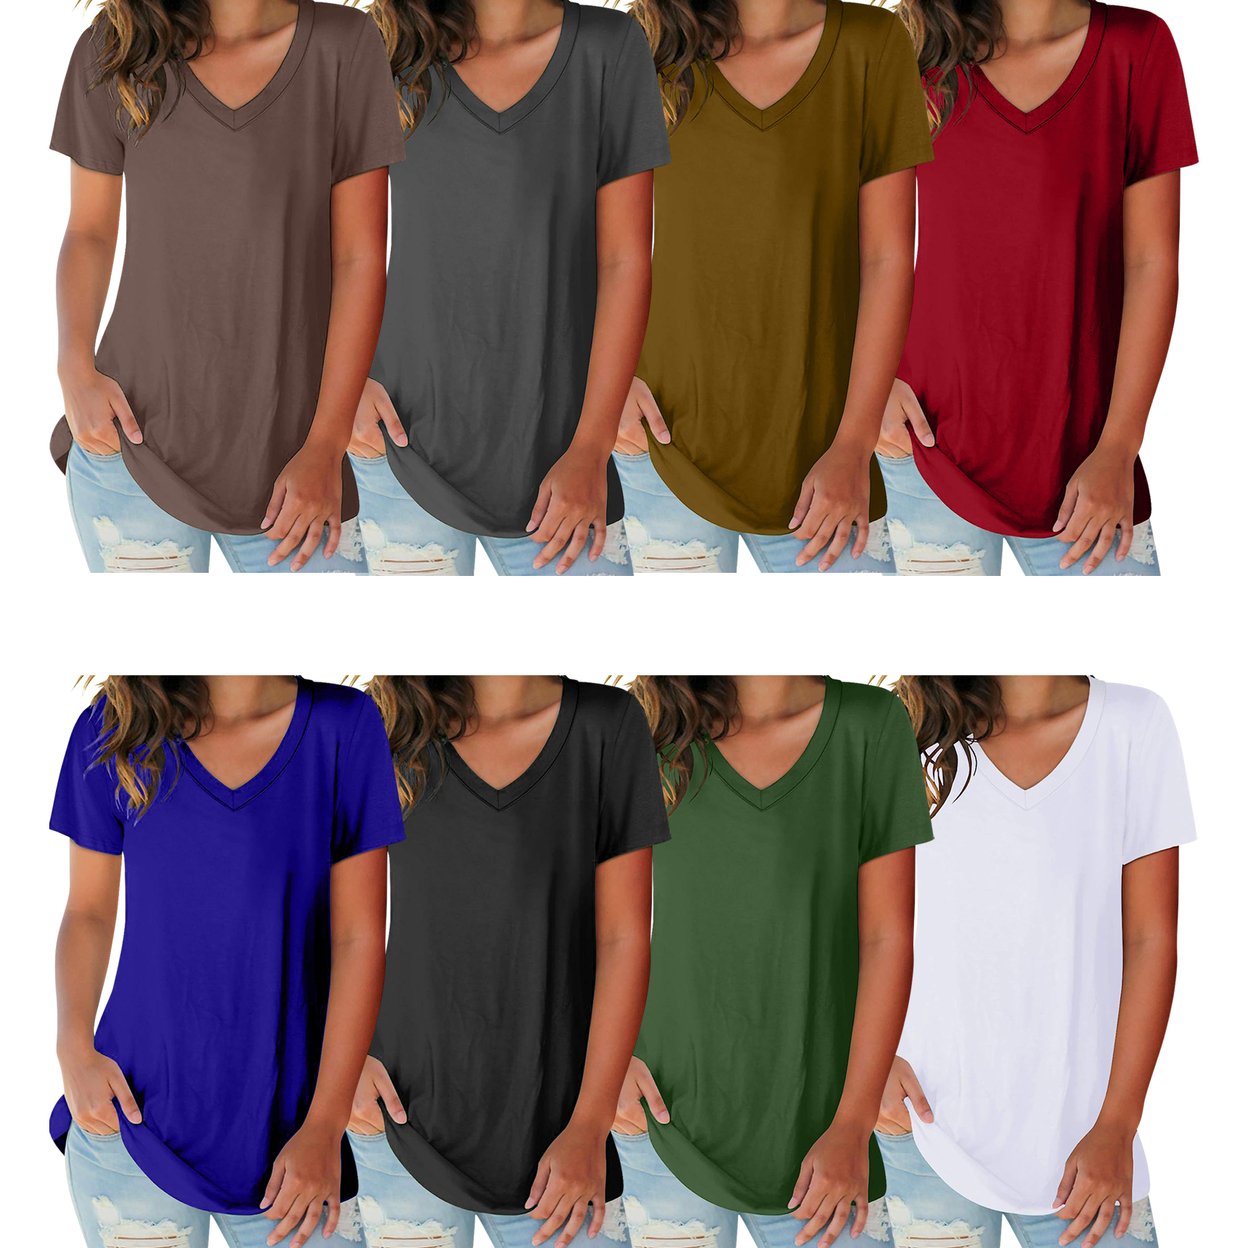 3-Pack: Women's Ultra Soft Smooth Cotton Blend Basic V-Neck Short Sleeve Shirts - Black, Navy, Brown, X-large